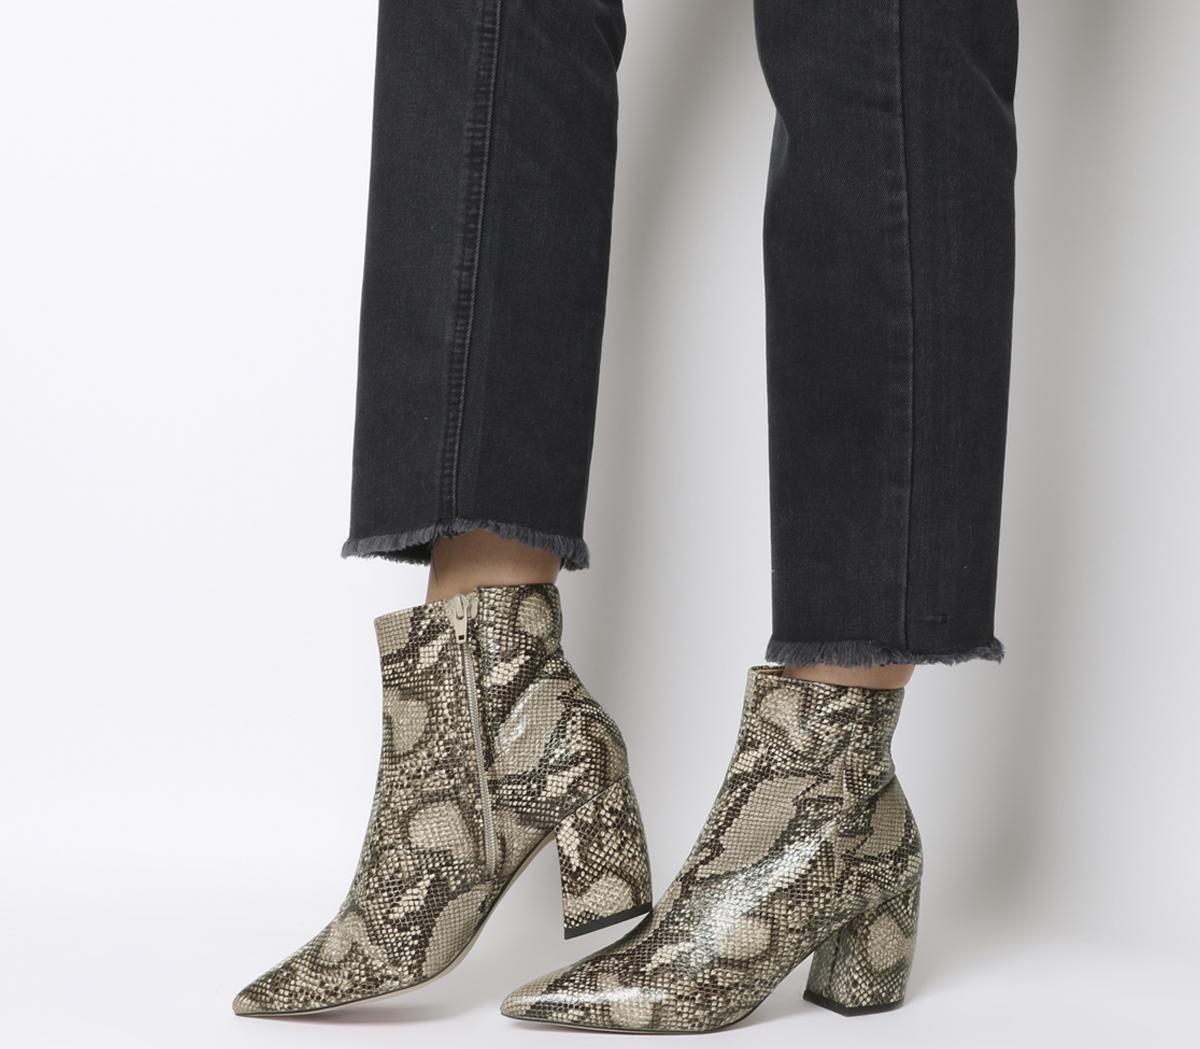 snake print womens boots